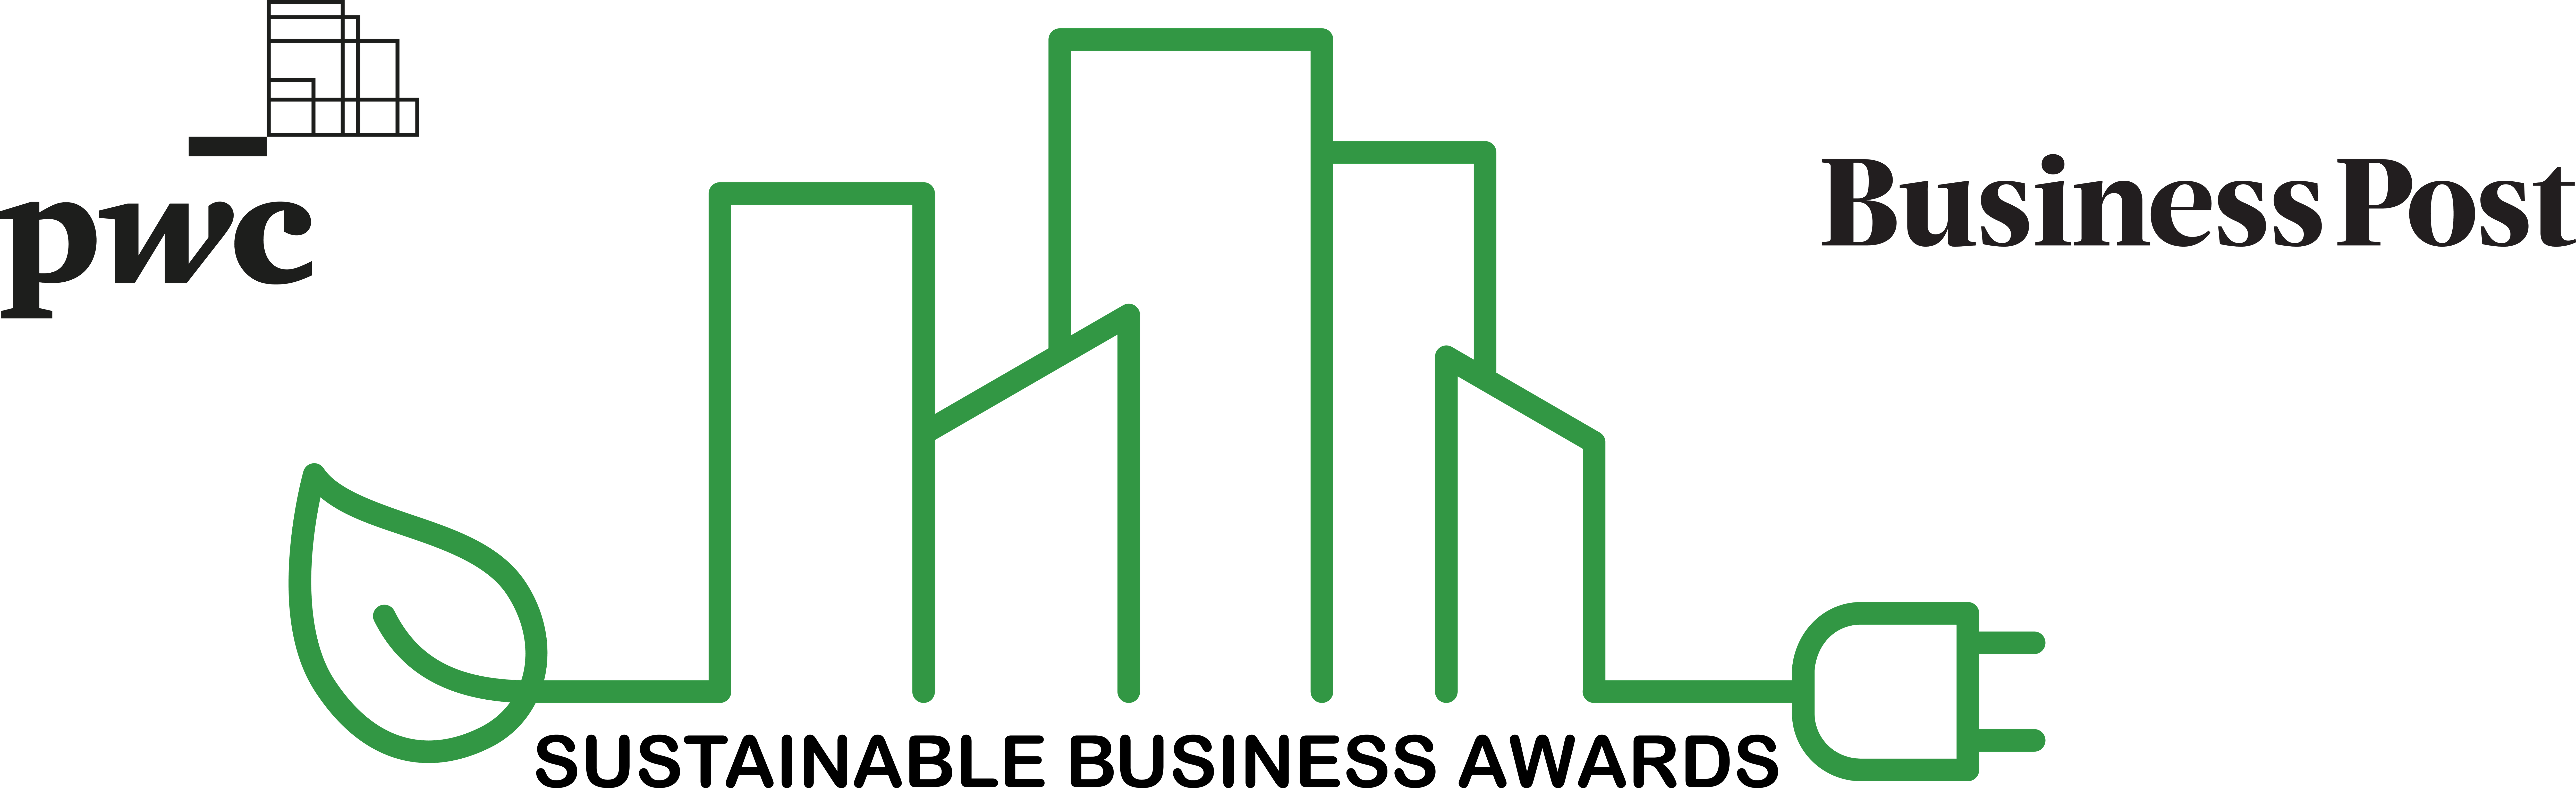 Sustainable Business Awards 2023